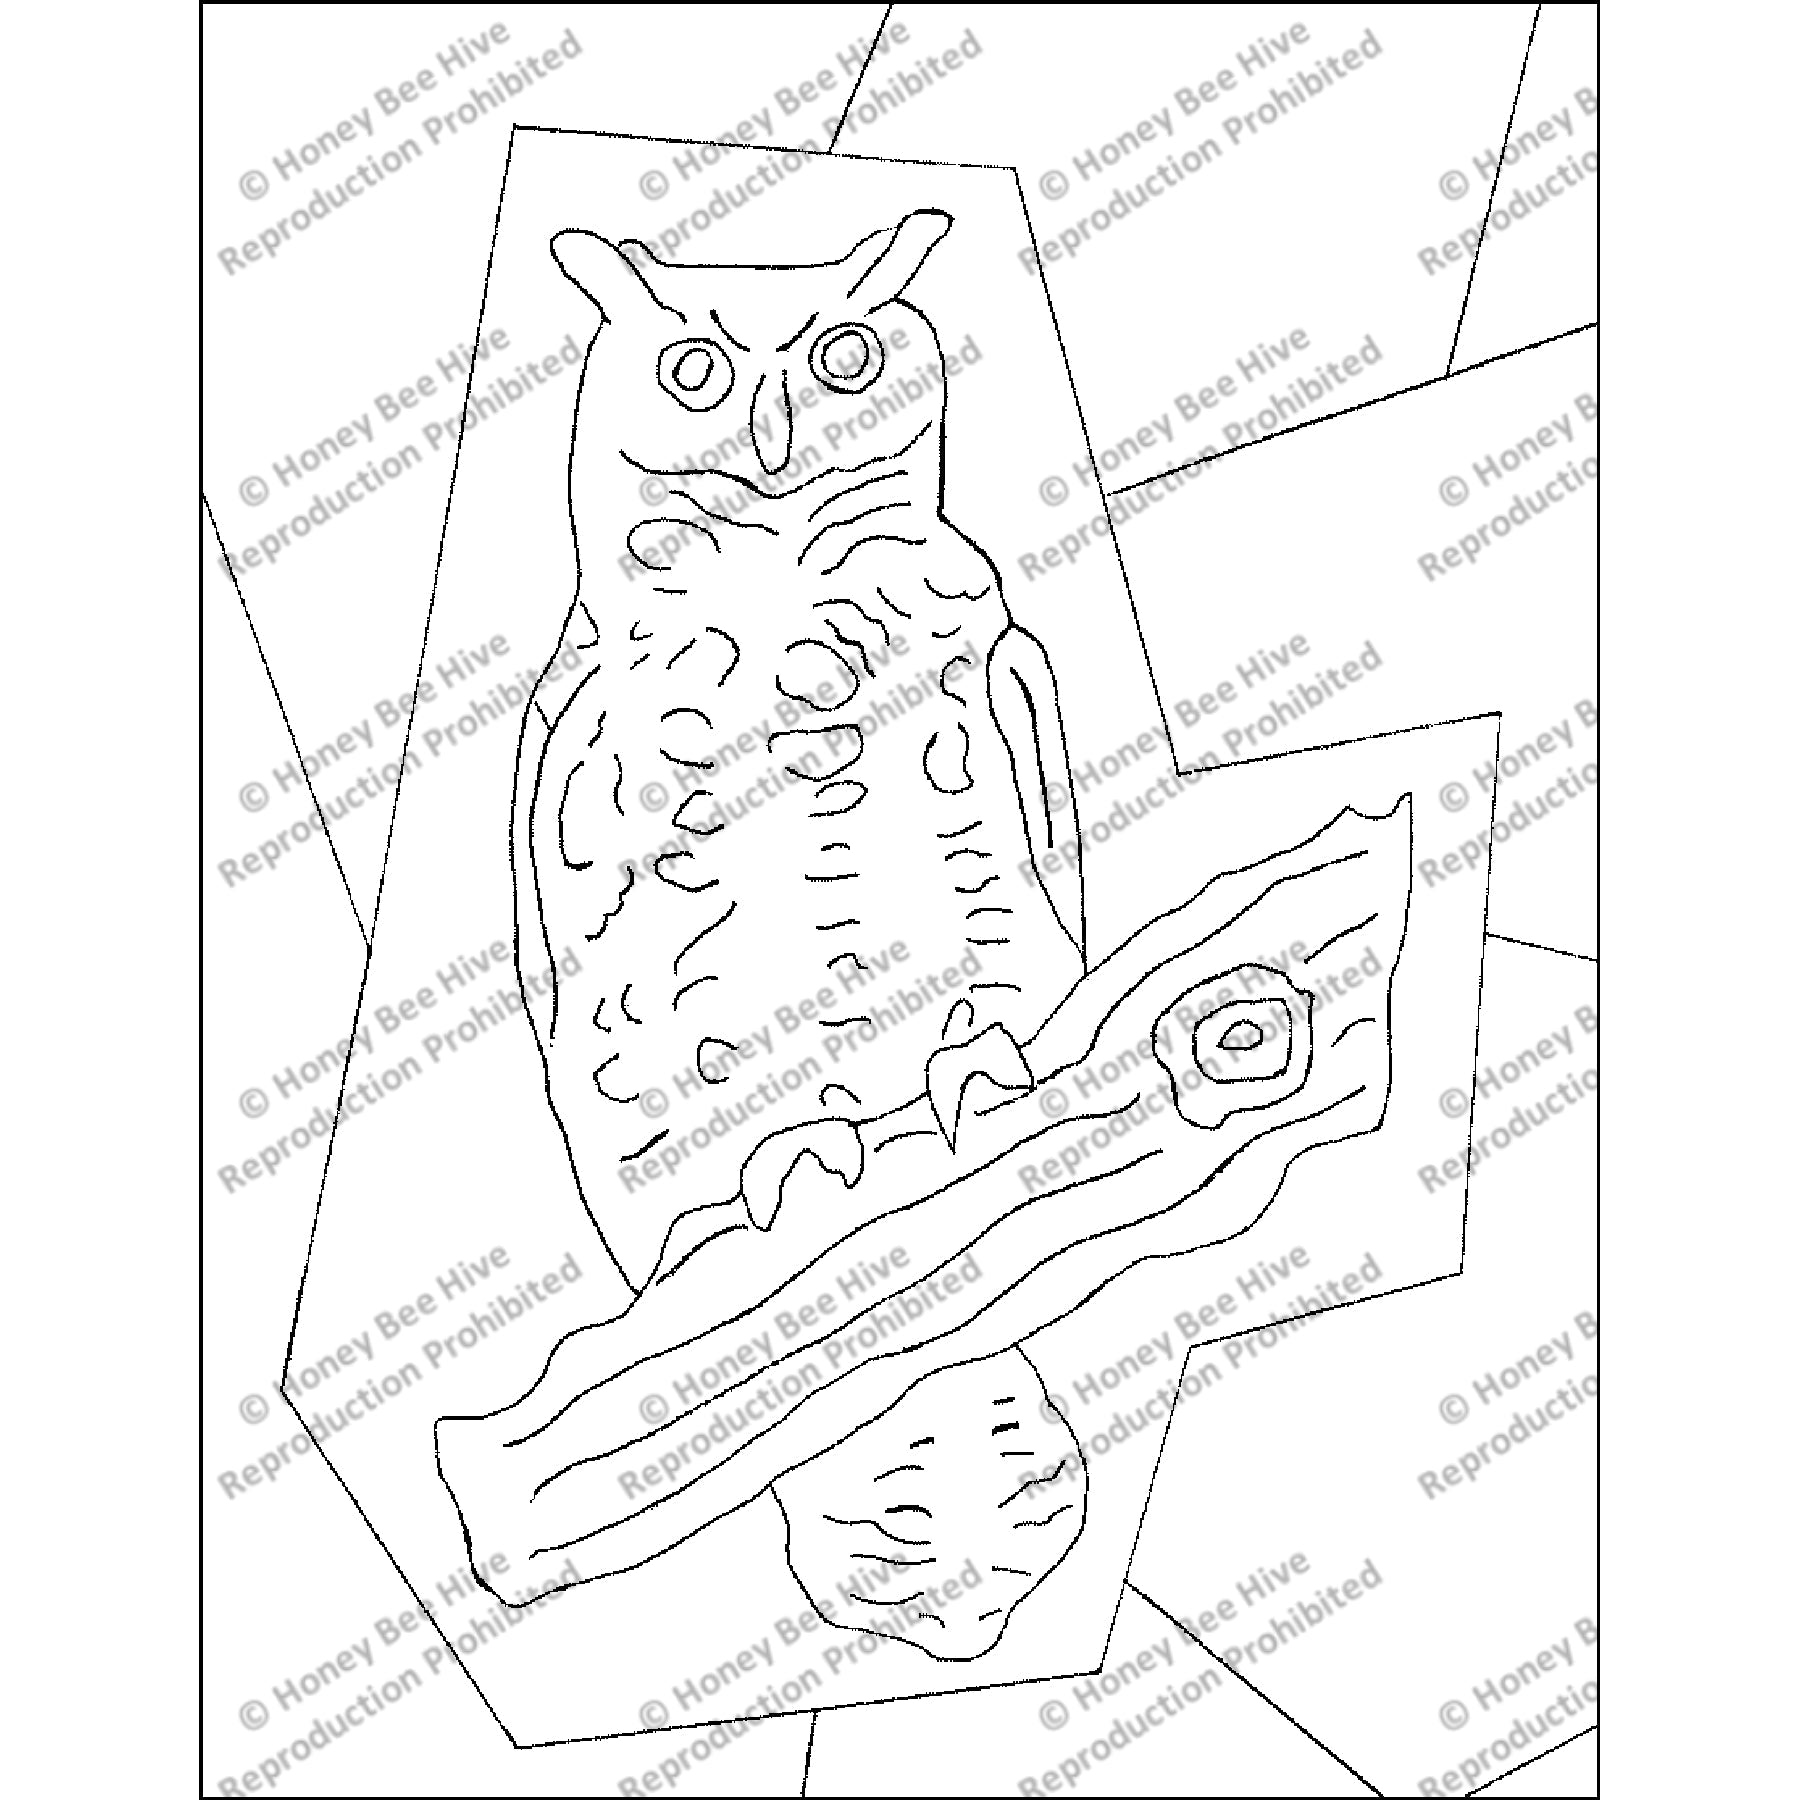 Crazy Quilt - Great Horned Owl, rug hooking pattern